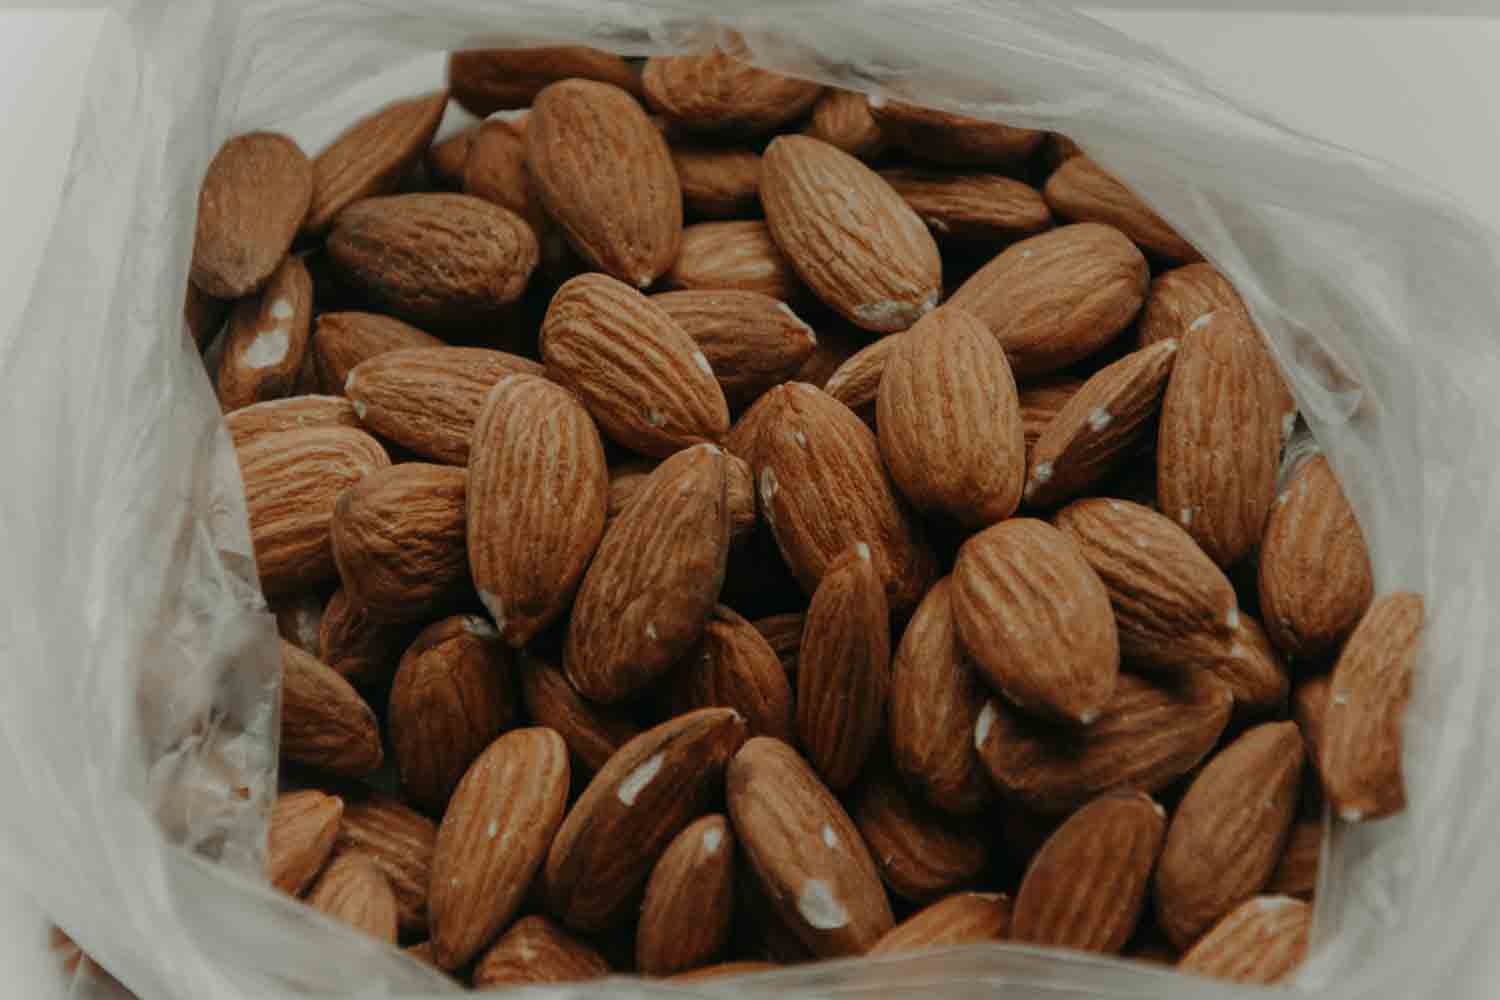 Almonds in a bag